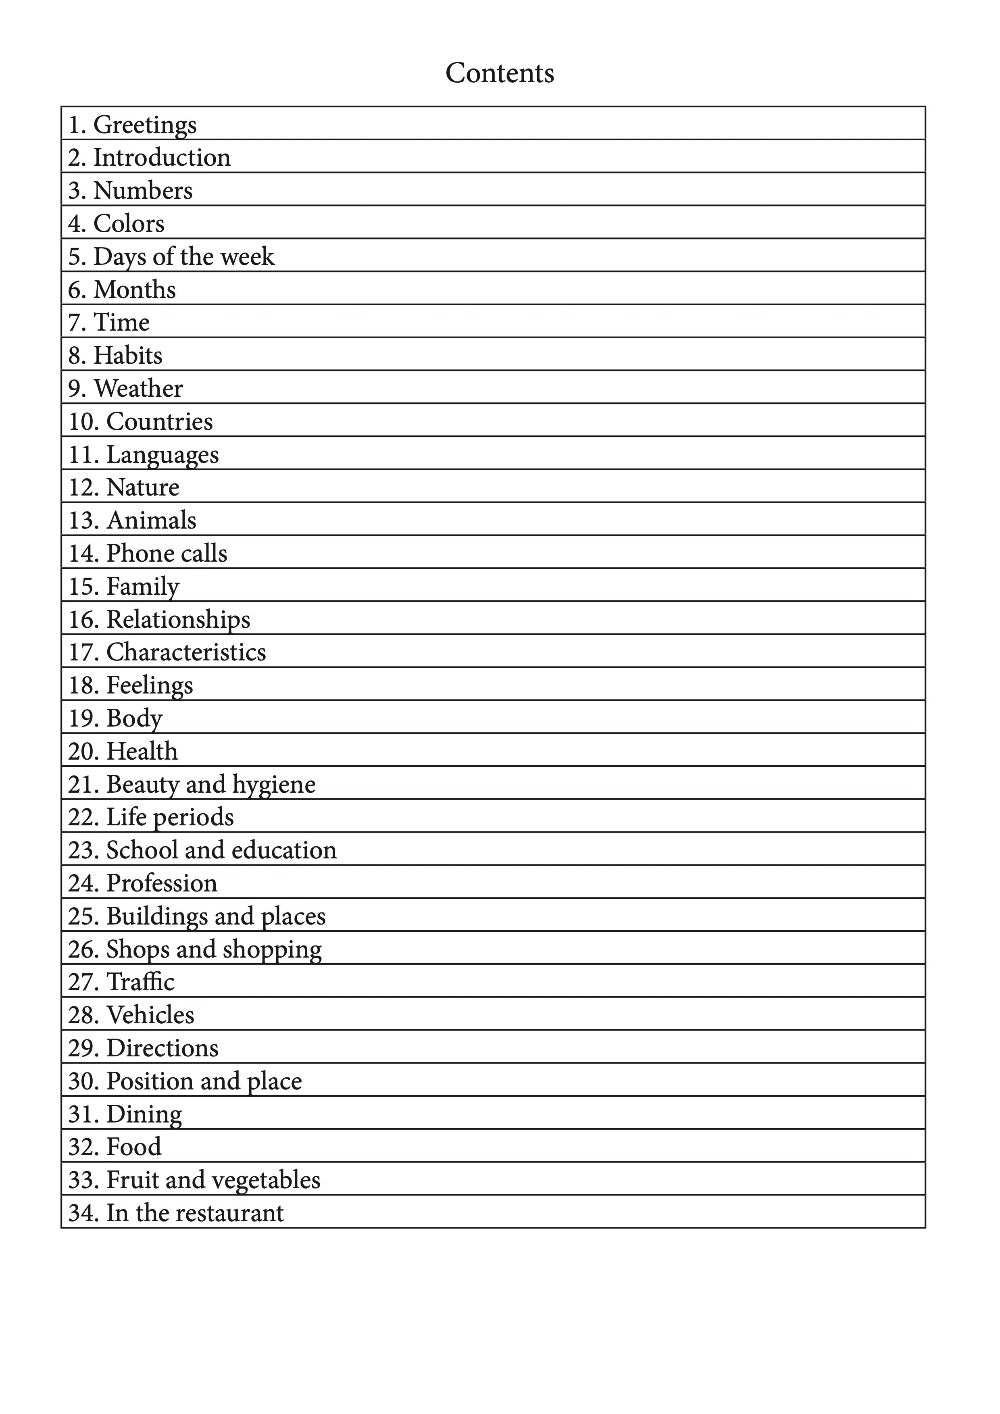 Ngomba language learning notebook contents page 1